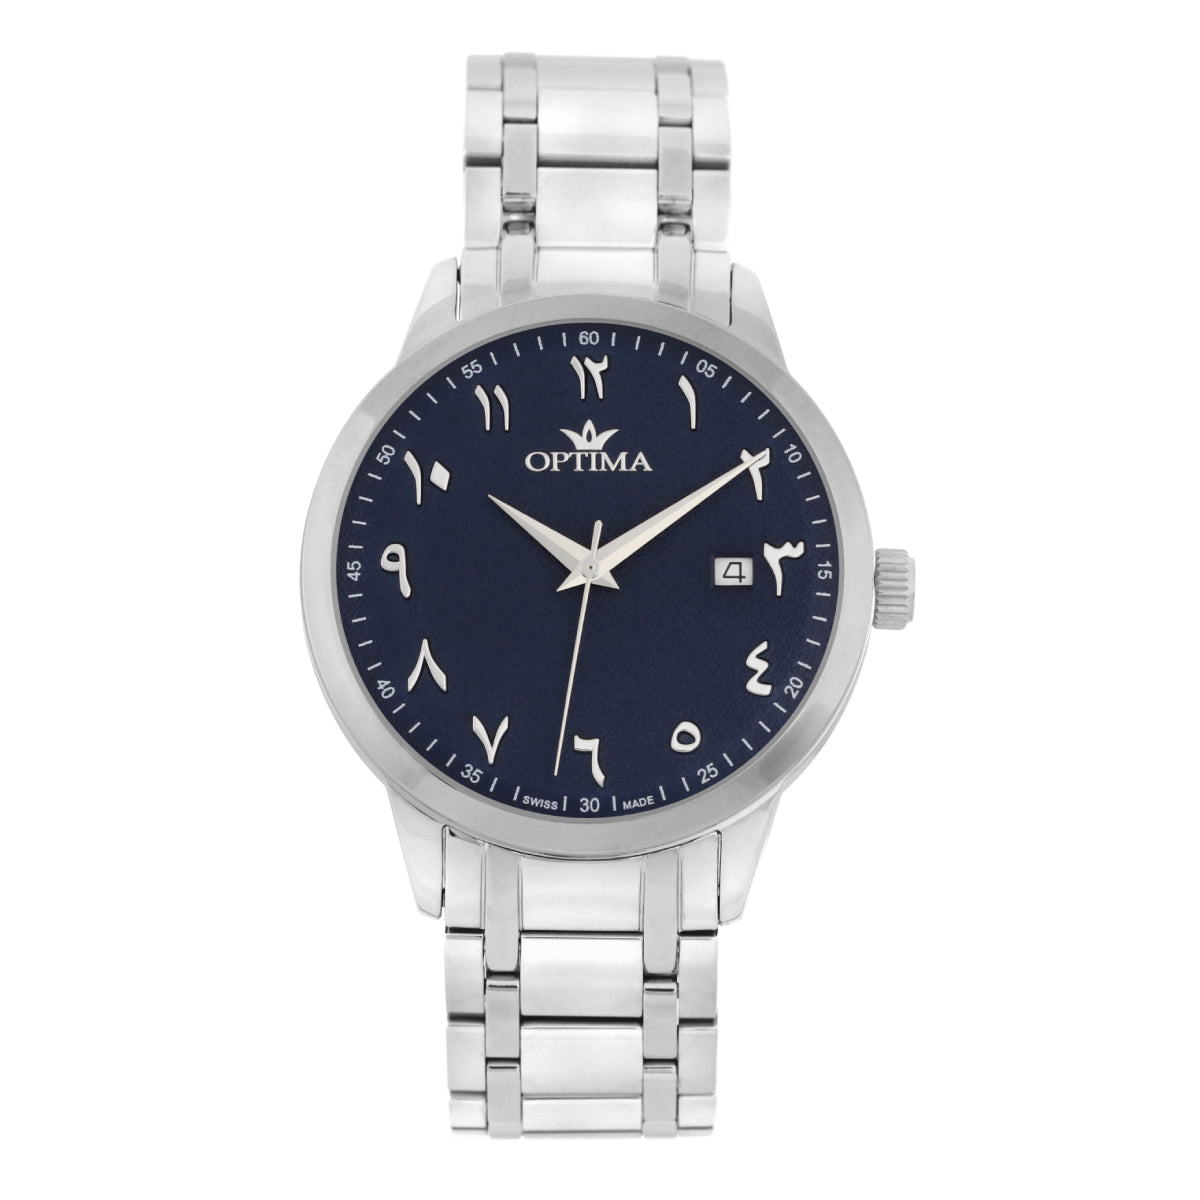 Optima Men's Swiss Quartz Watch with Blue Dial - OPT-0055